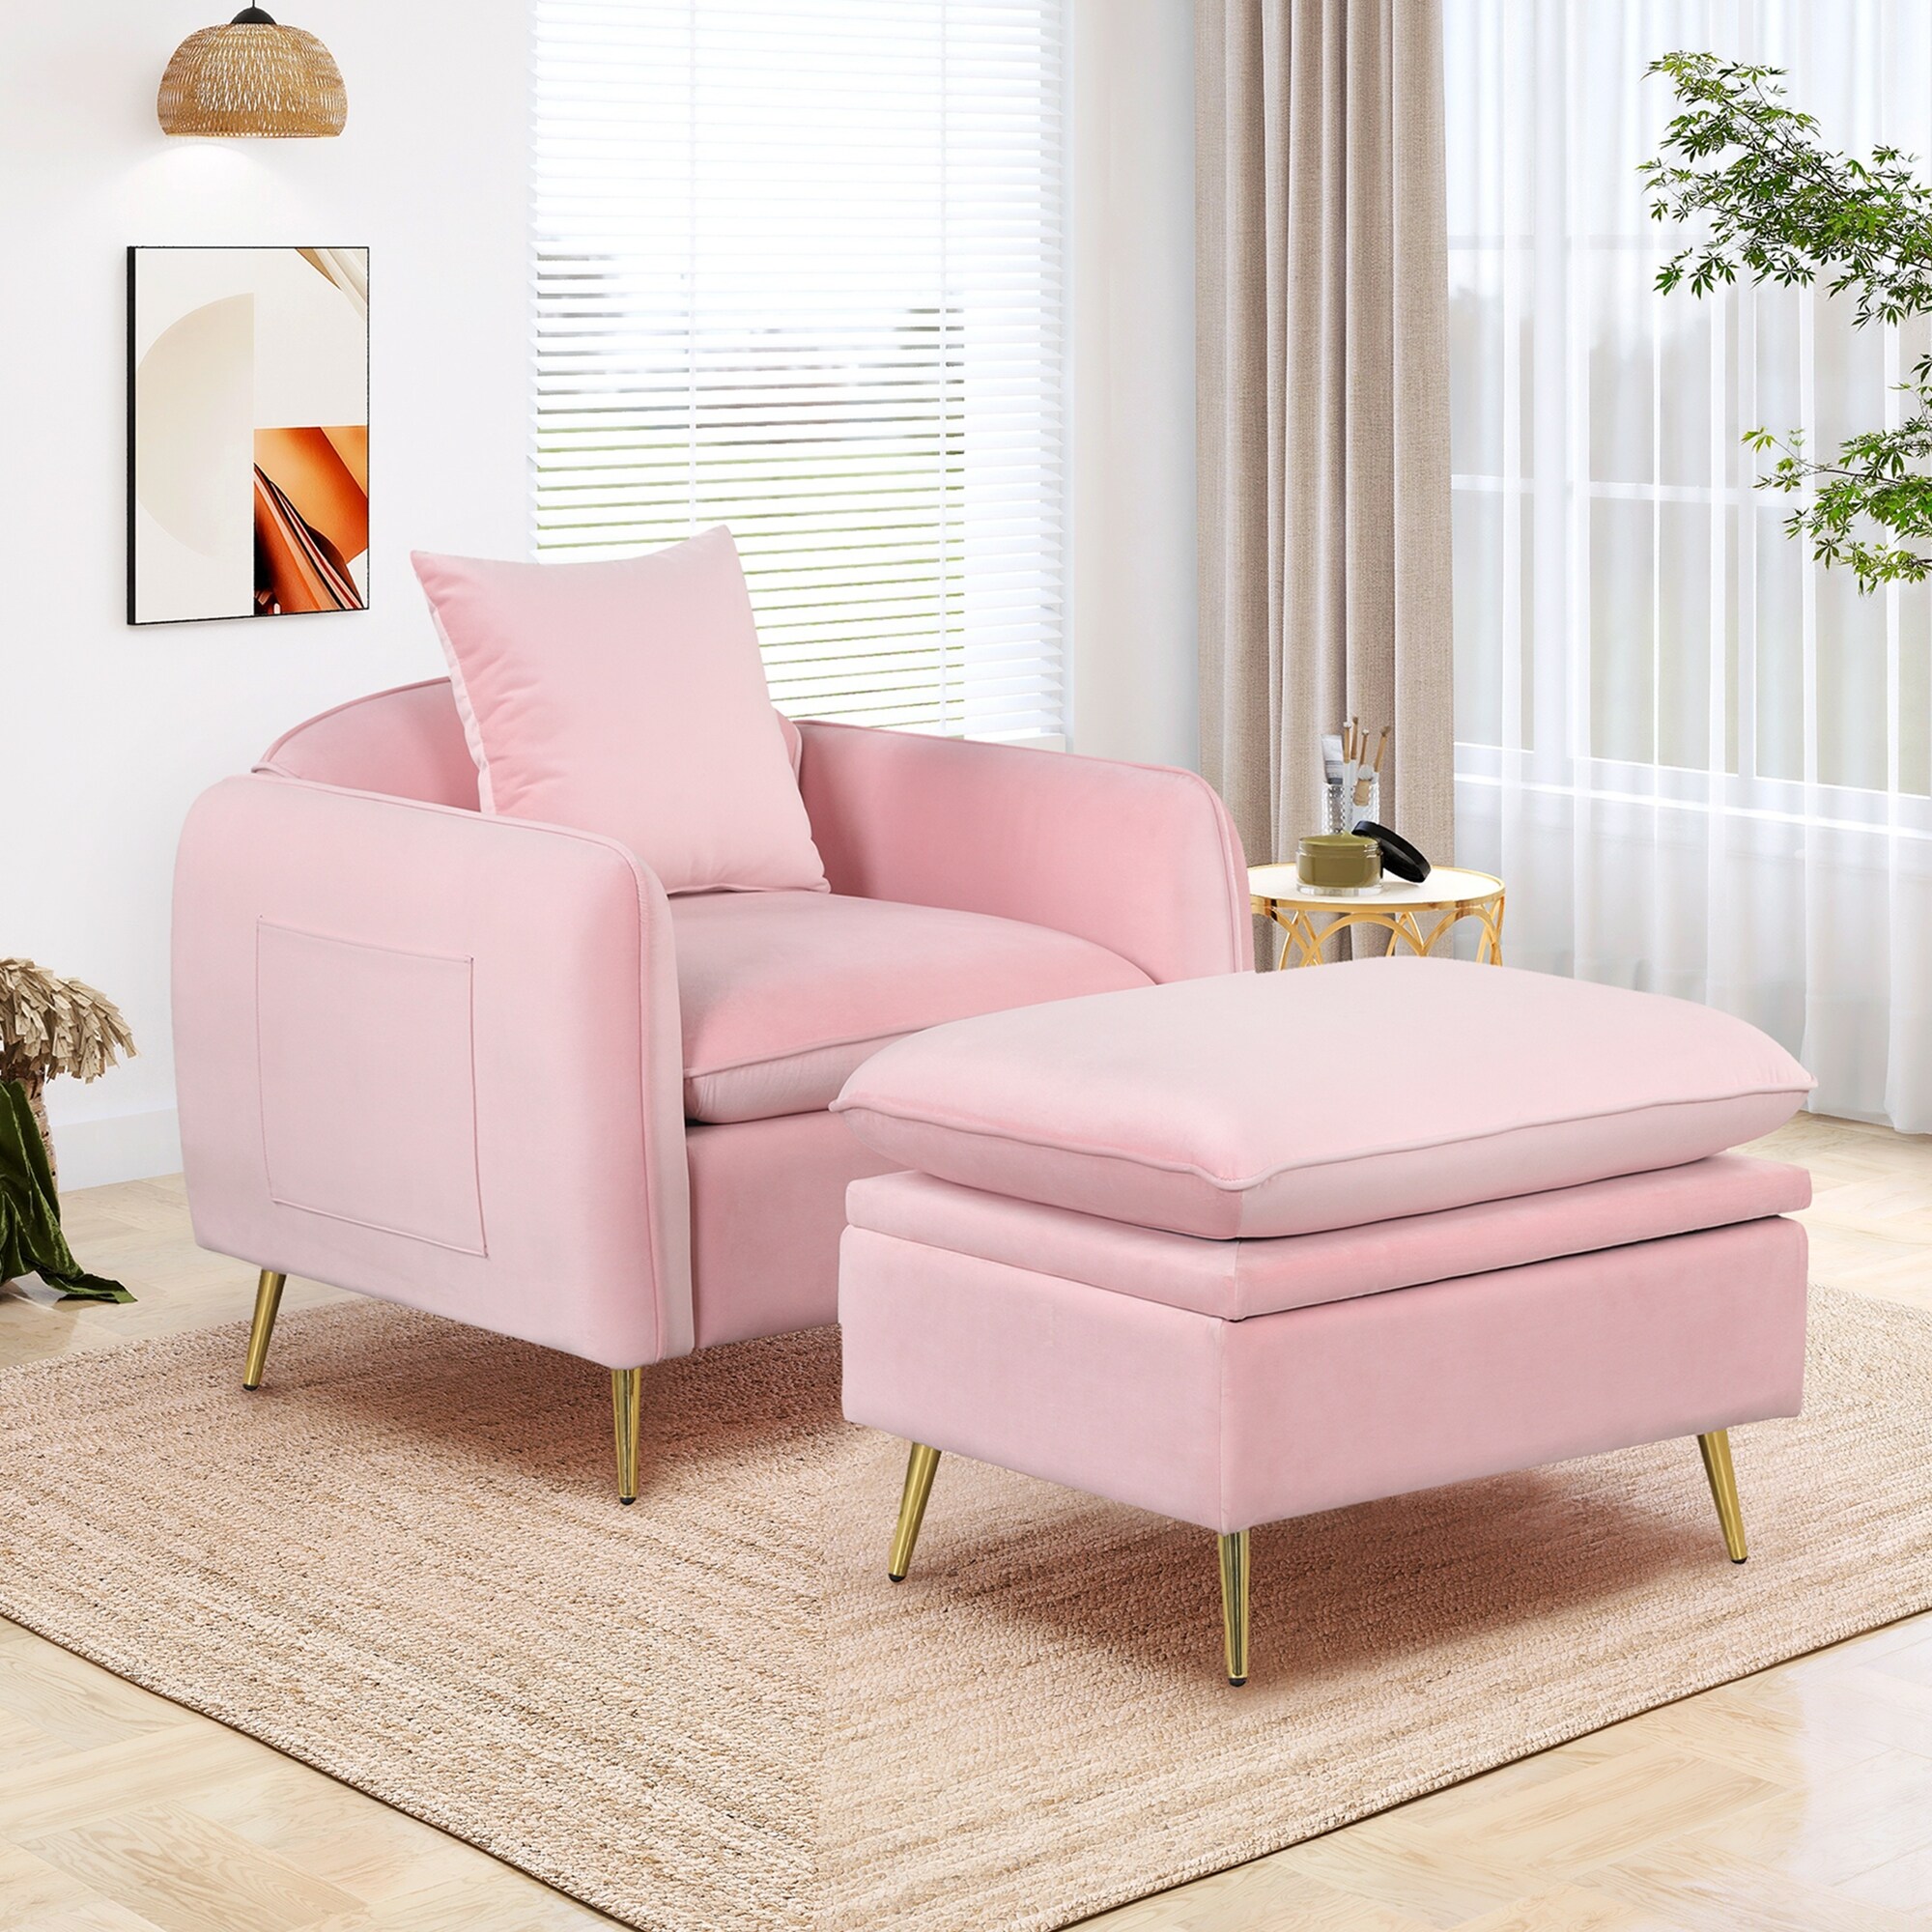 35.2 Velvet Upholstered Single Sofa With Storge Ottoman  Bolster Pillows And Side Pocket For Living Room  Bed Room